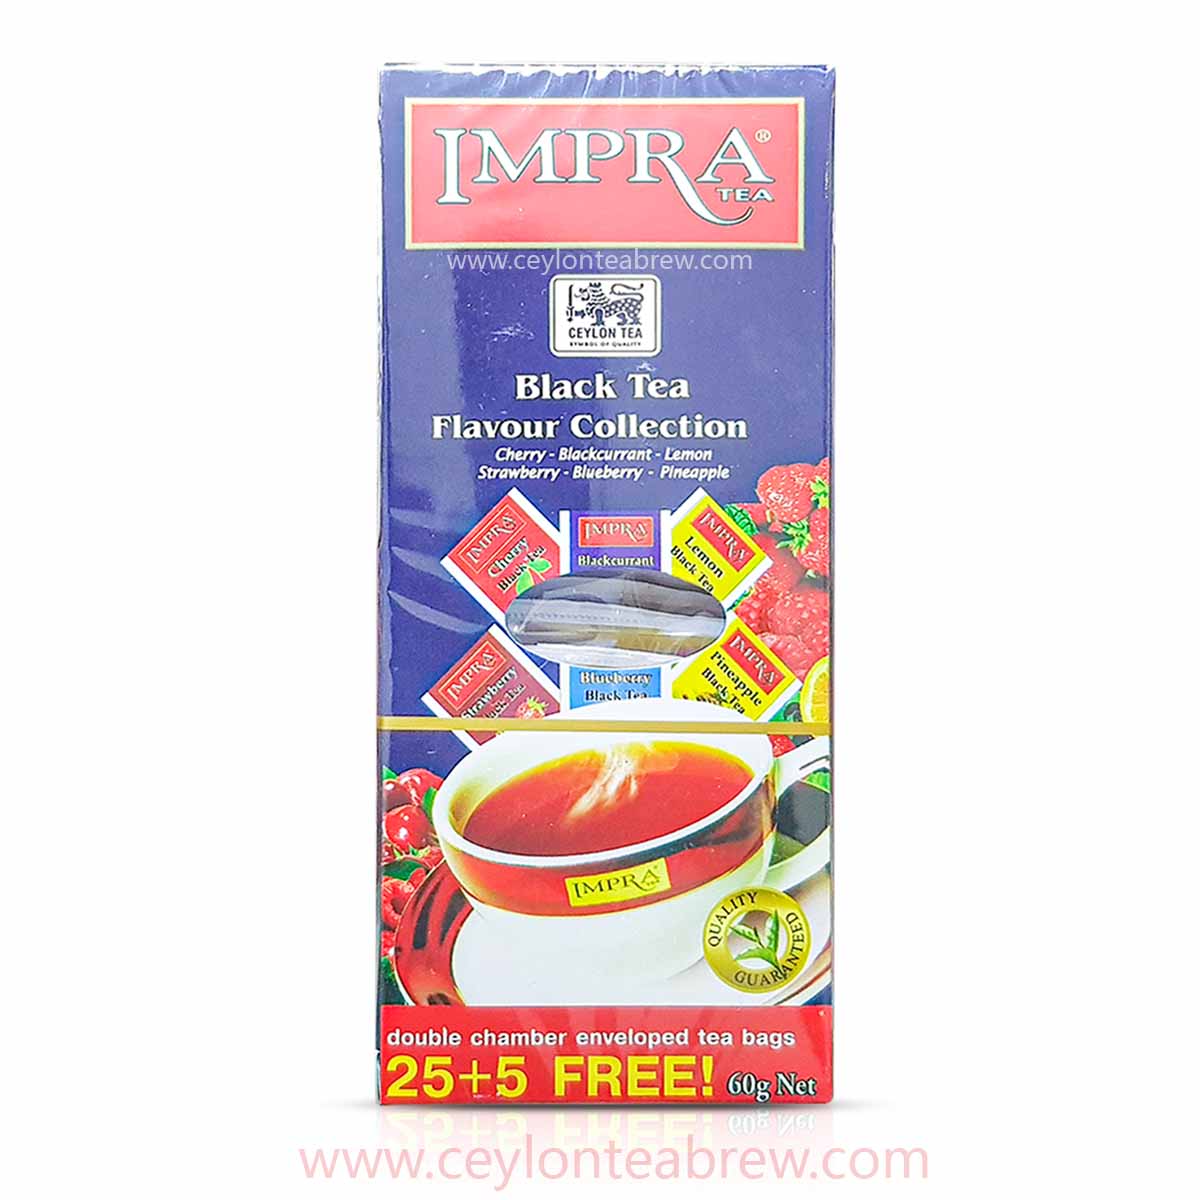 Impra Ceylon black tea fruit flavored collection